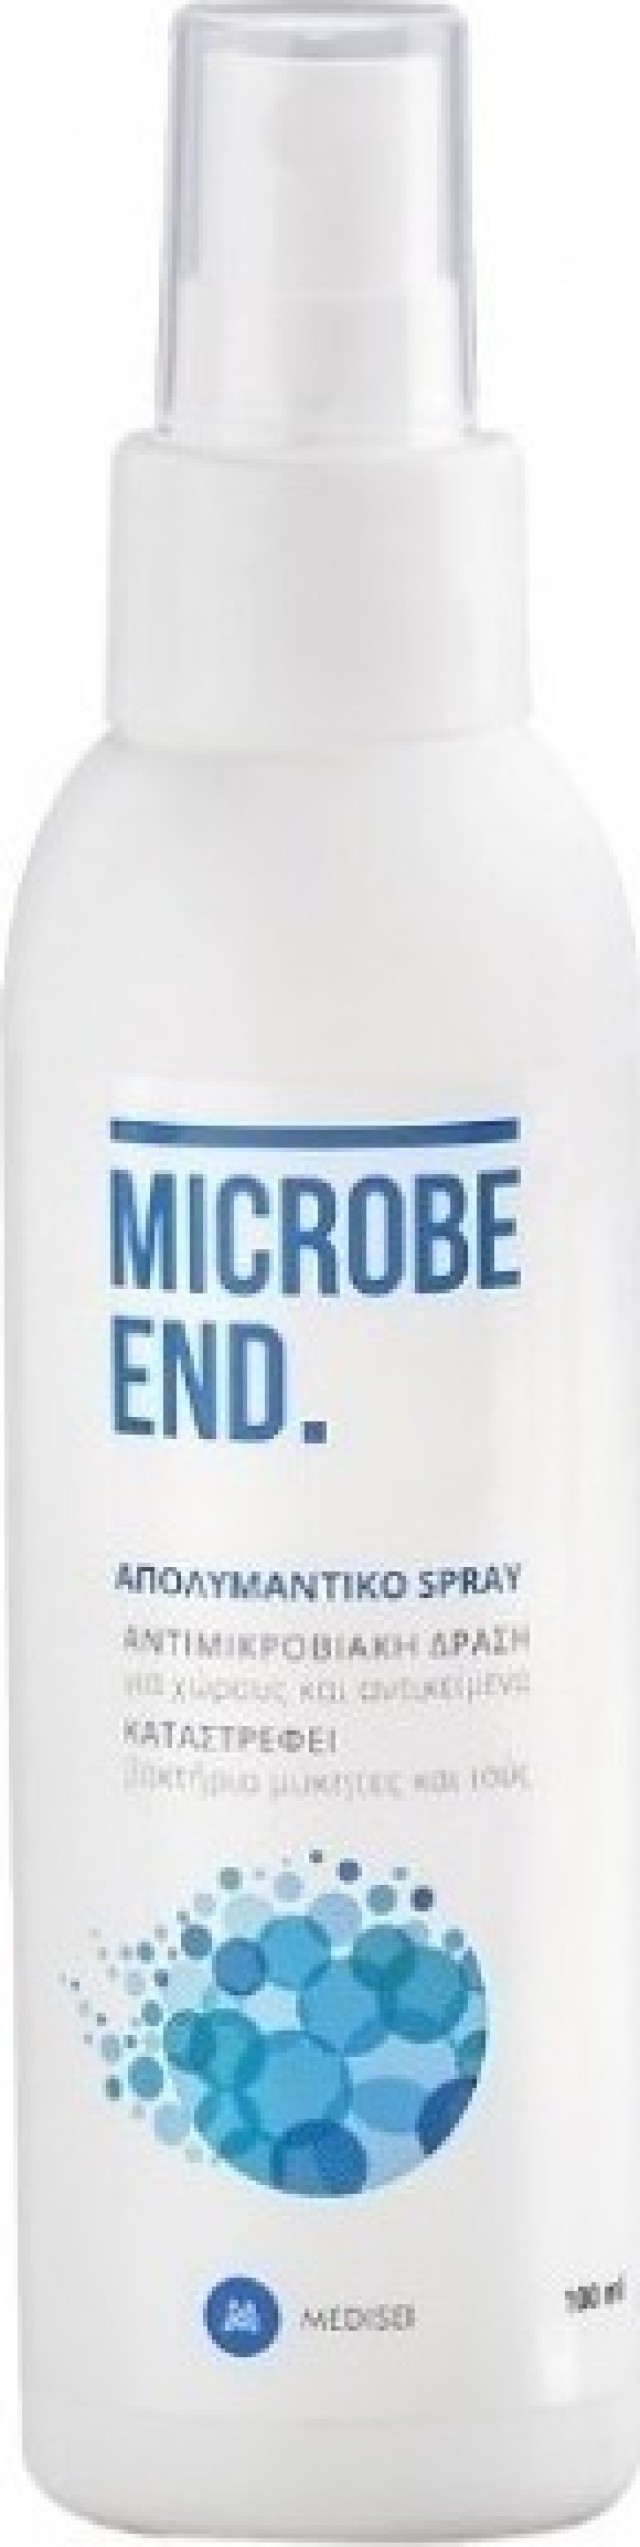 Medisei - Microbe End Απολυμαντικό Spray 100ml